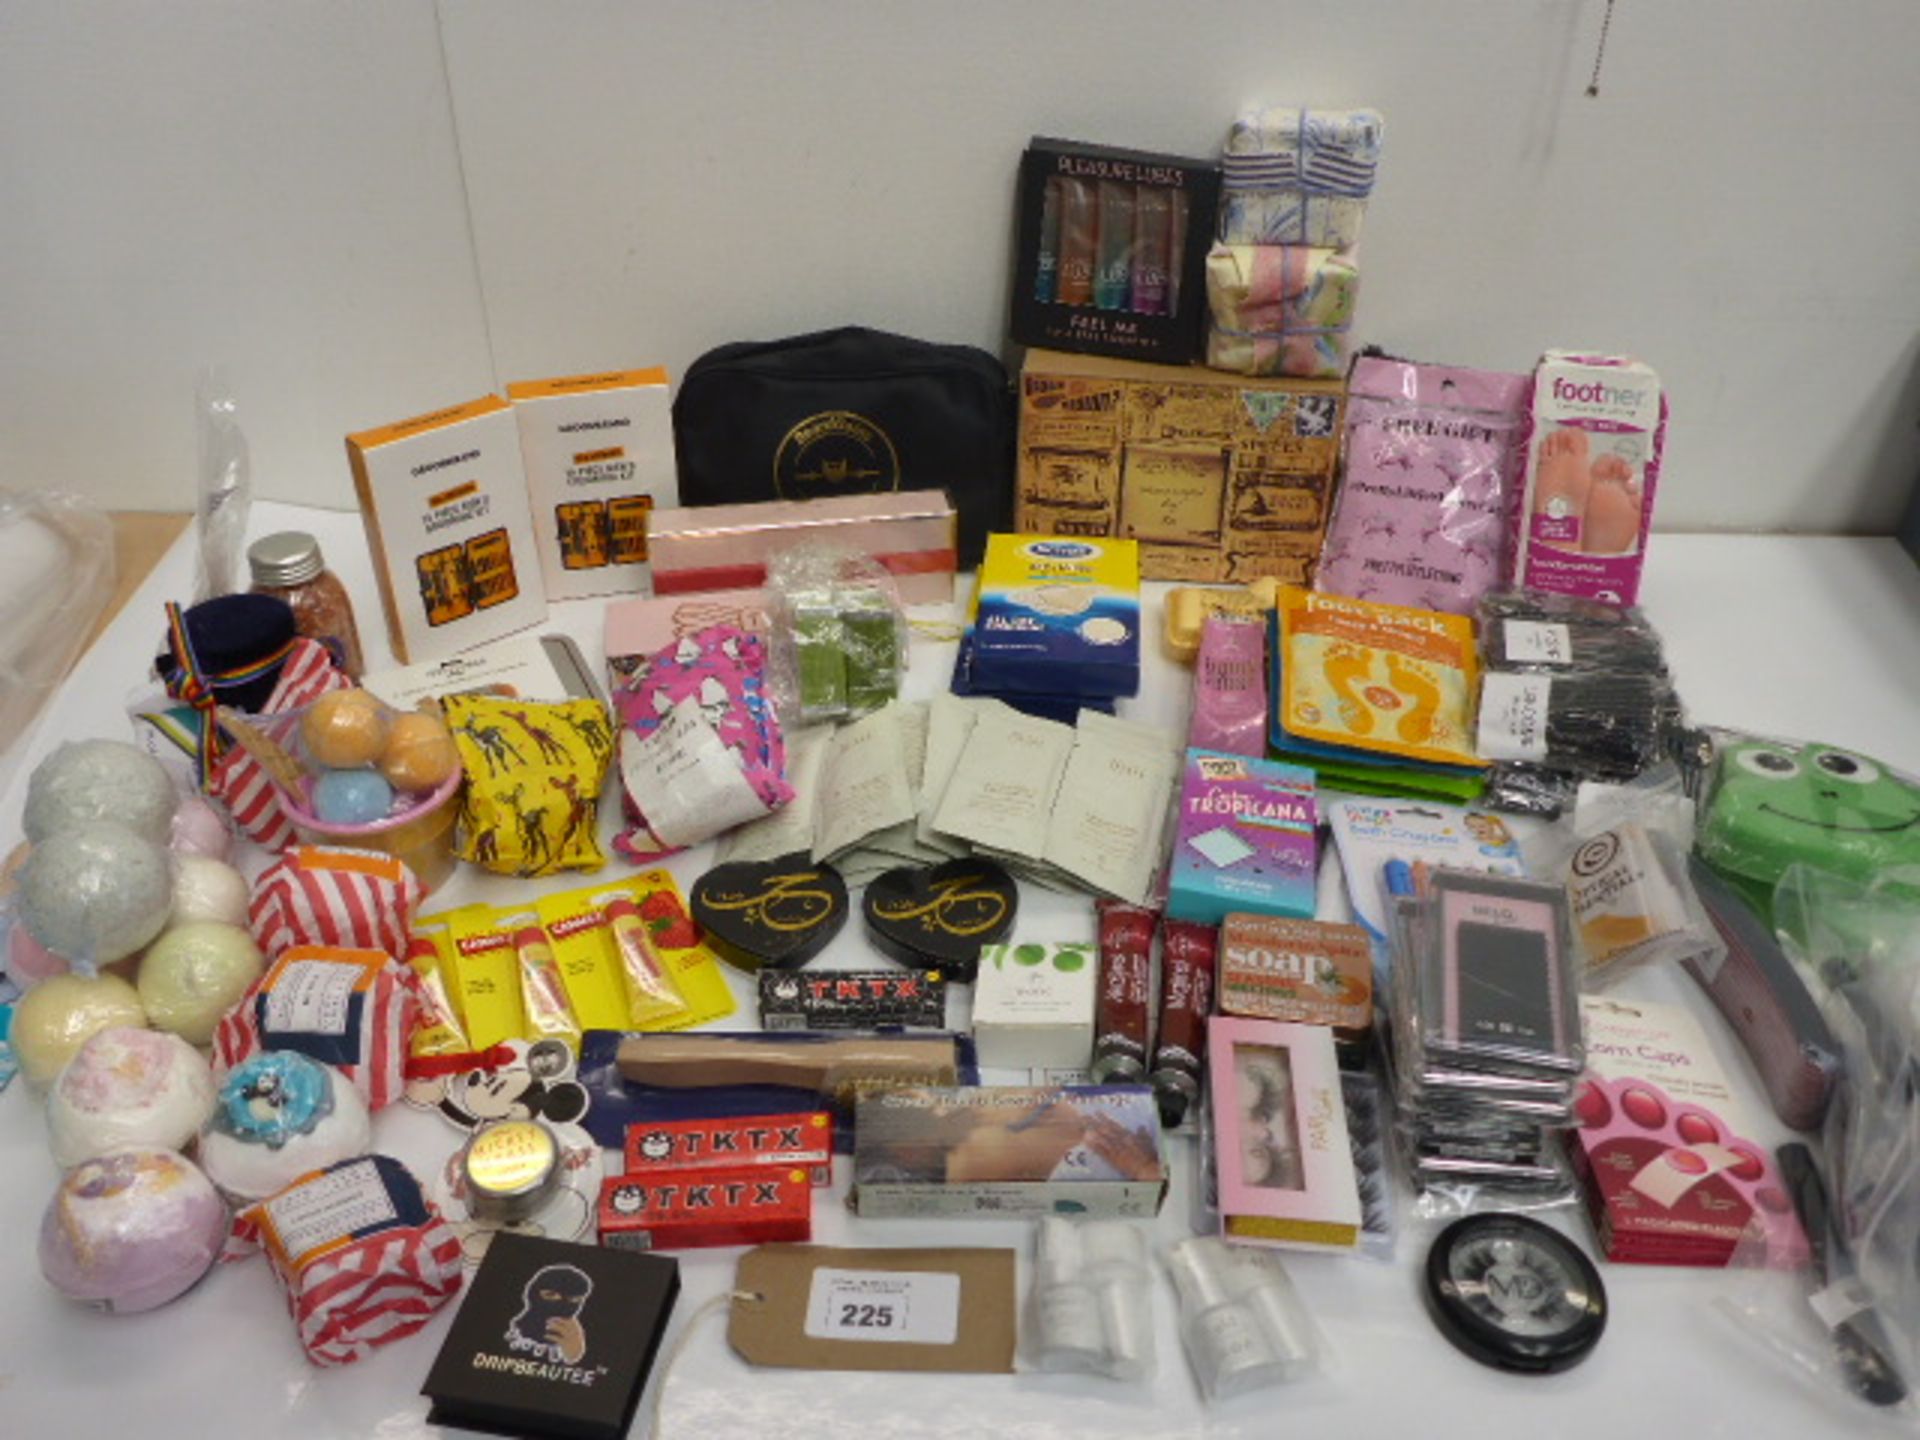 Large bag of beauty products including false eyelashes, soaps, bath bombs, lip balm, men's